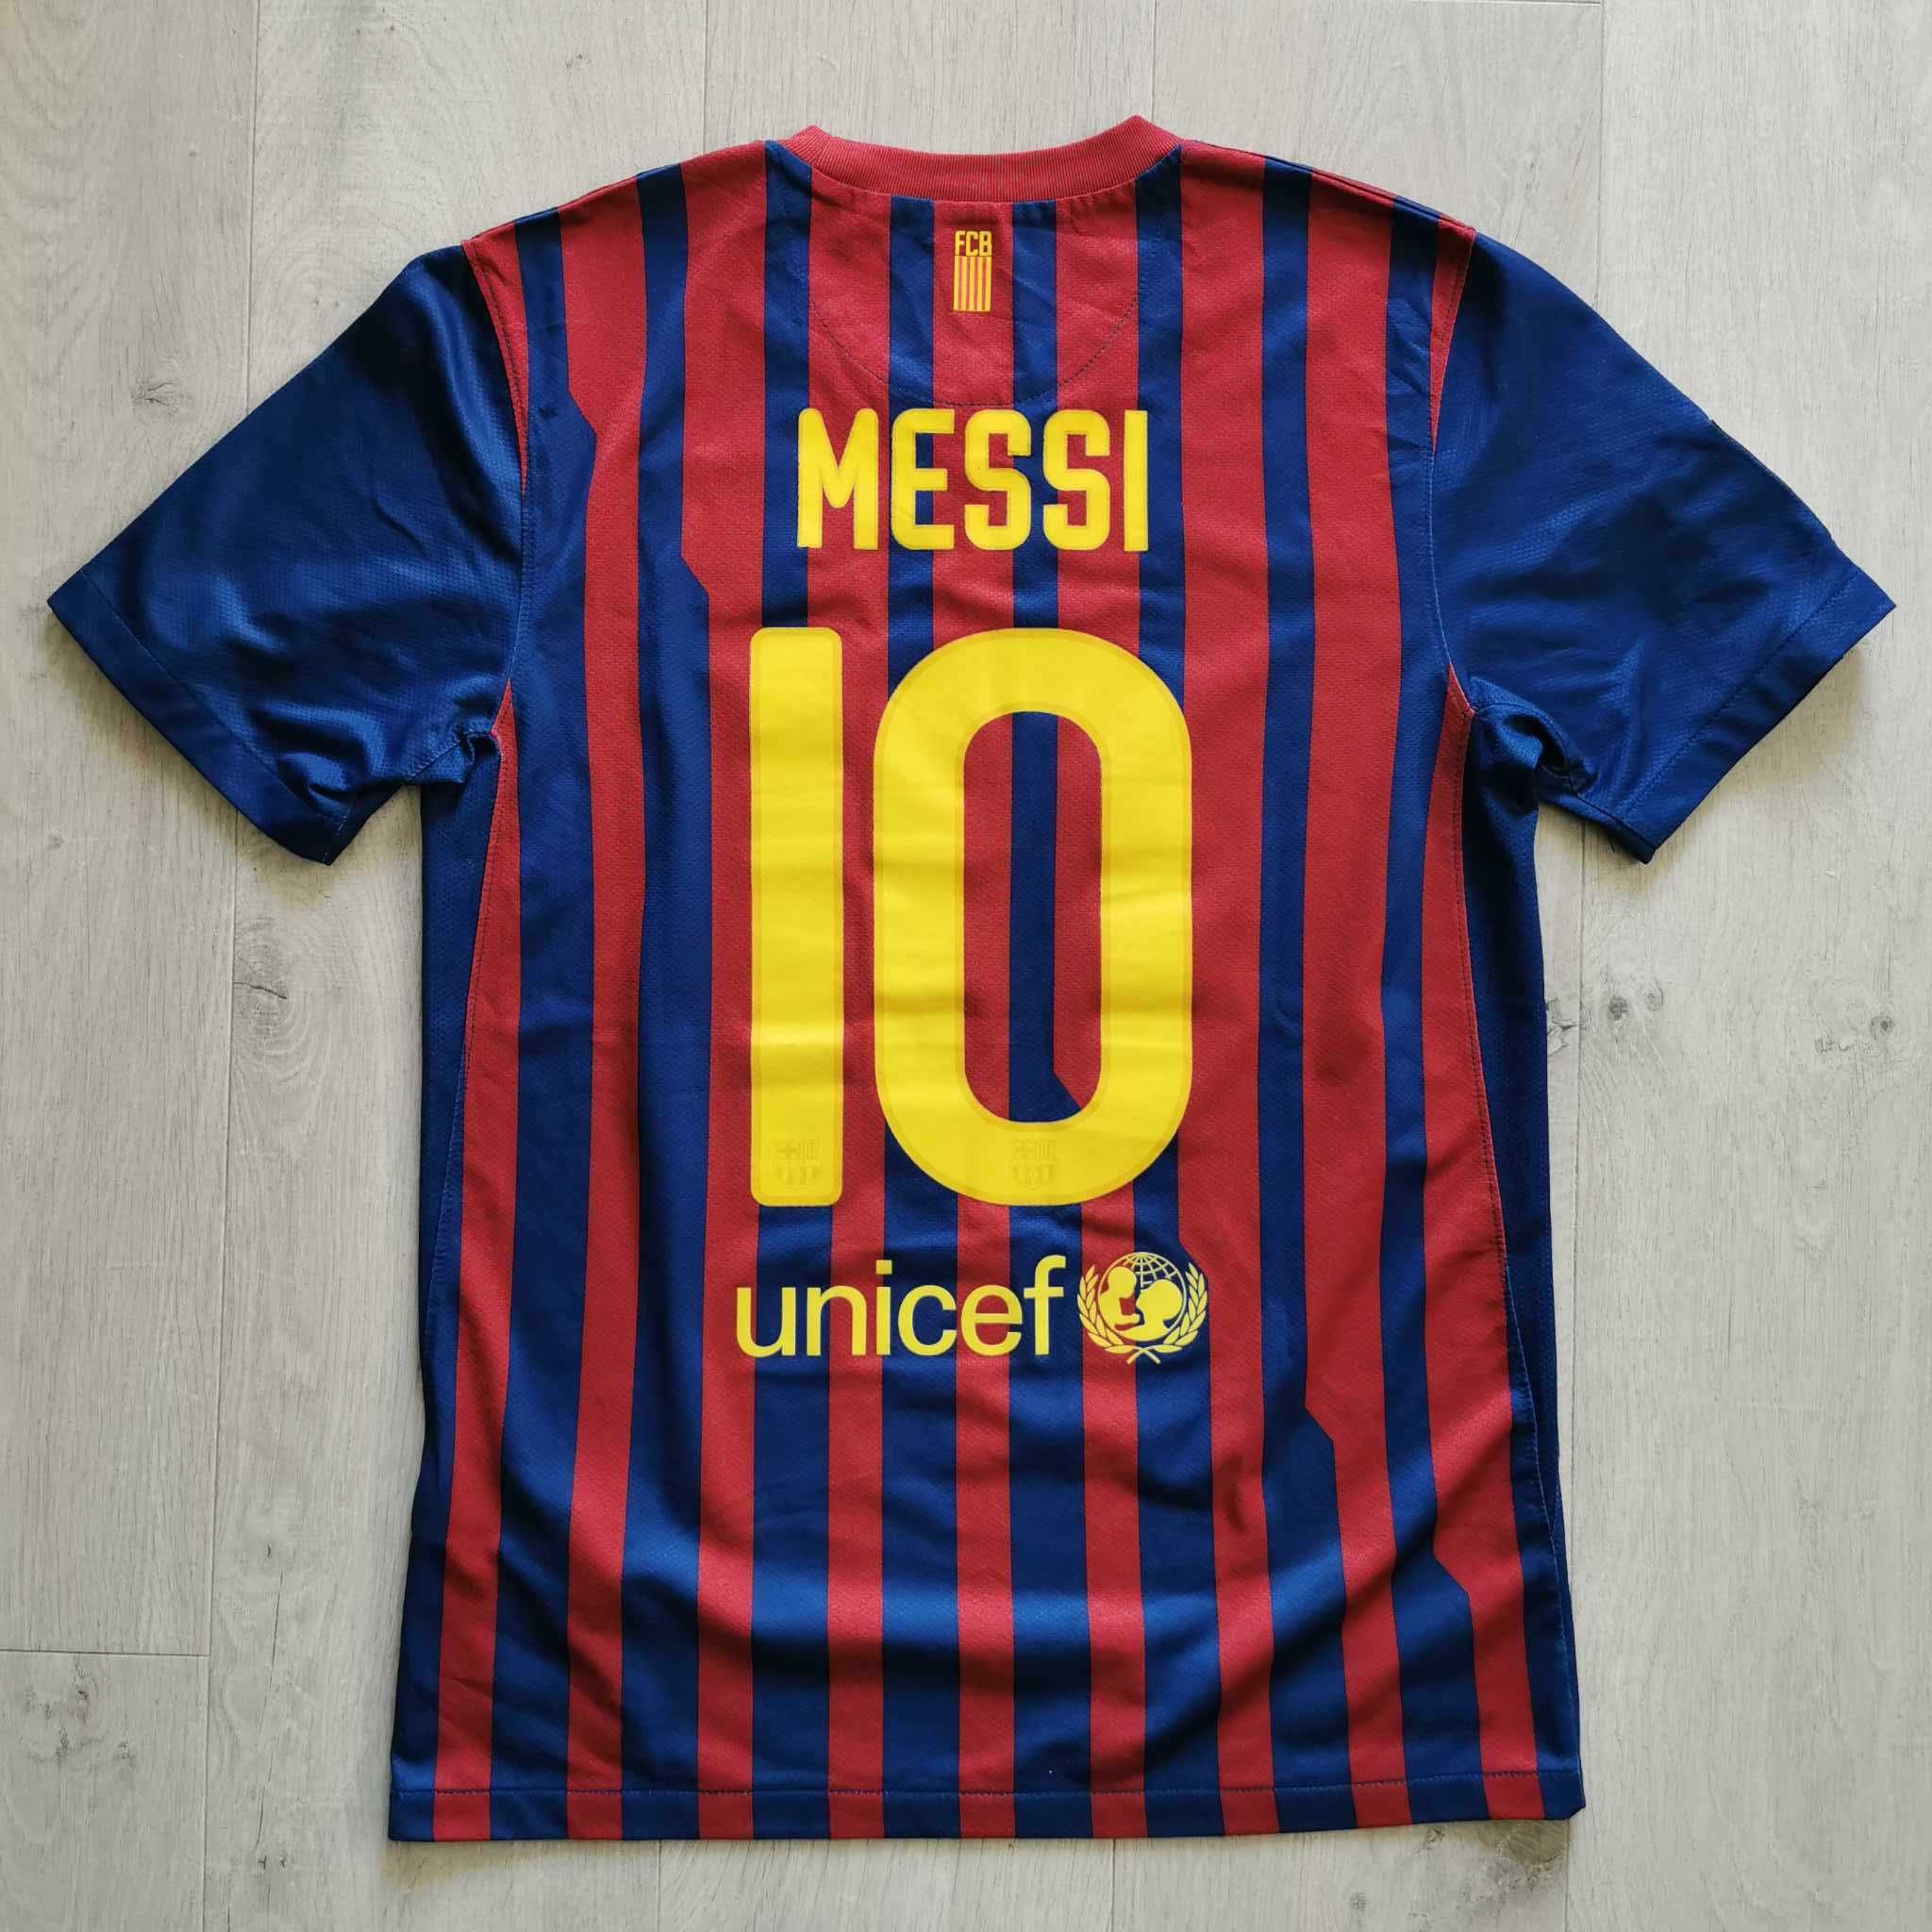 Koszulka Nike FC Barcelona 2011/12 Messi Home (domowa) rozmiar S